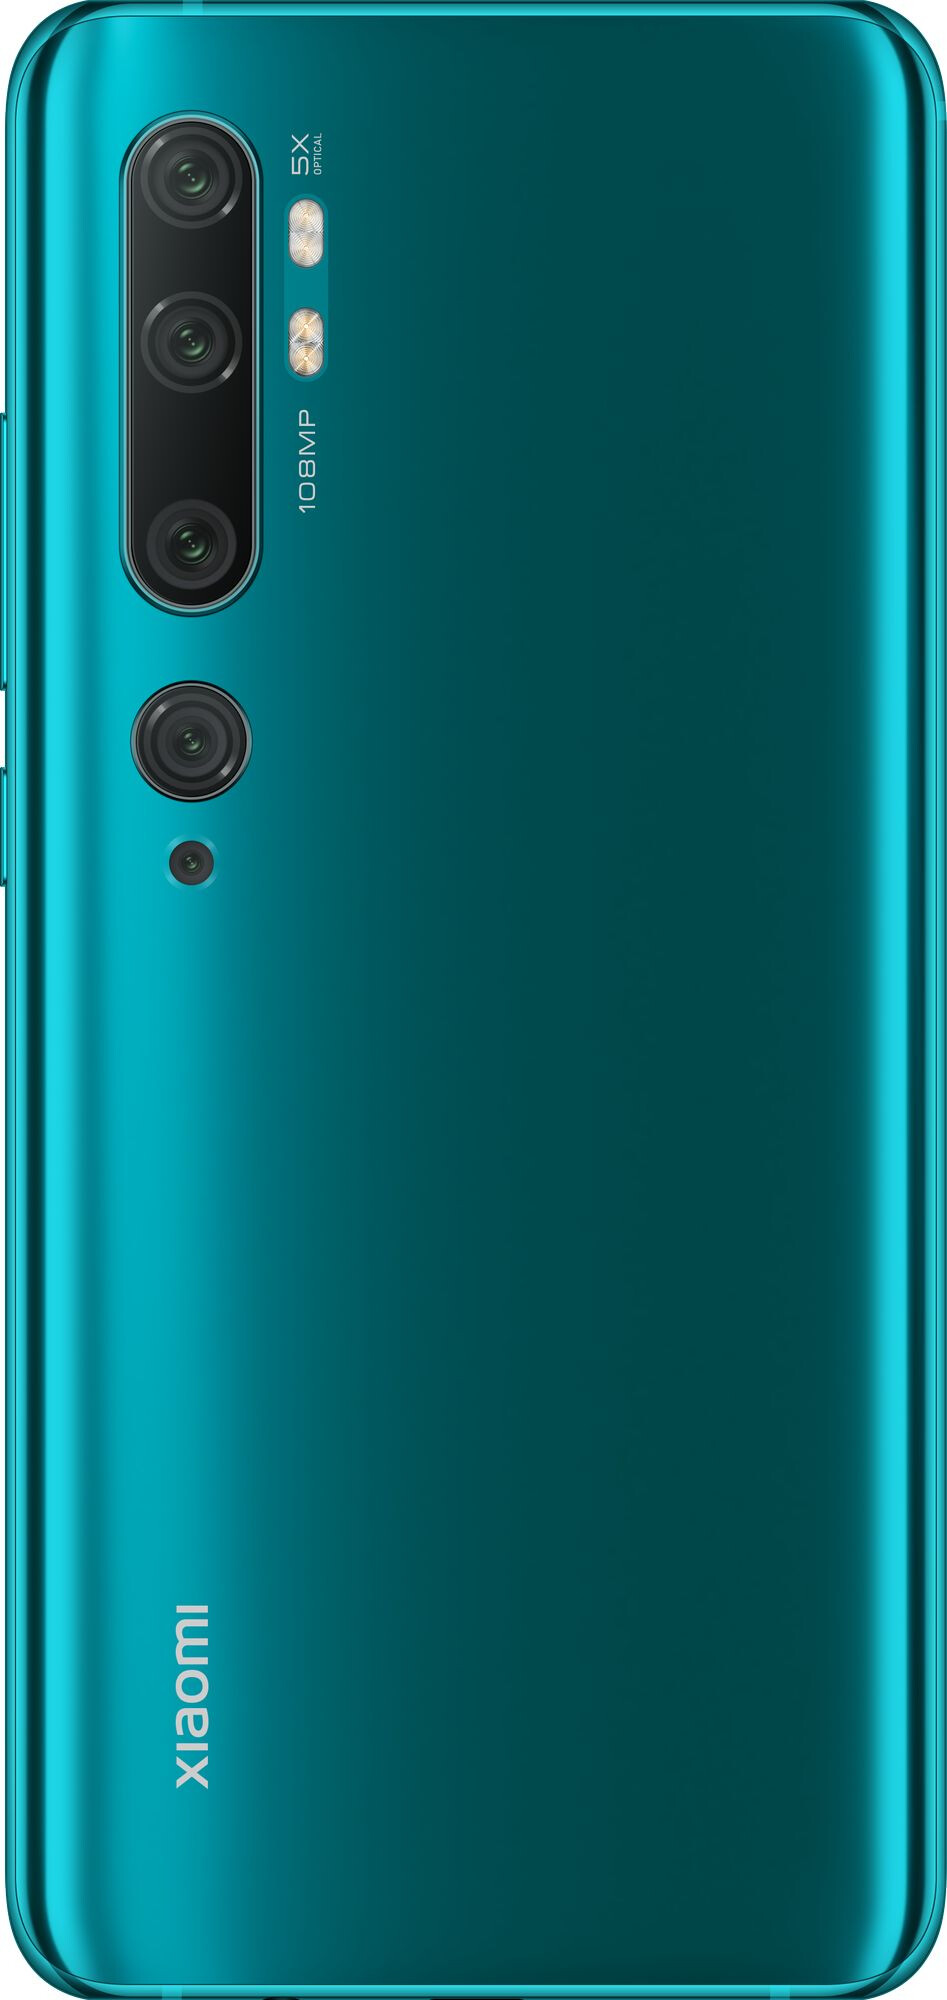 Смартфон Xiaomi Mi Note 10 6/128GB Aurora Green (Зеленый)